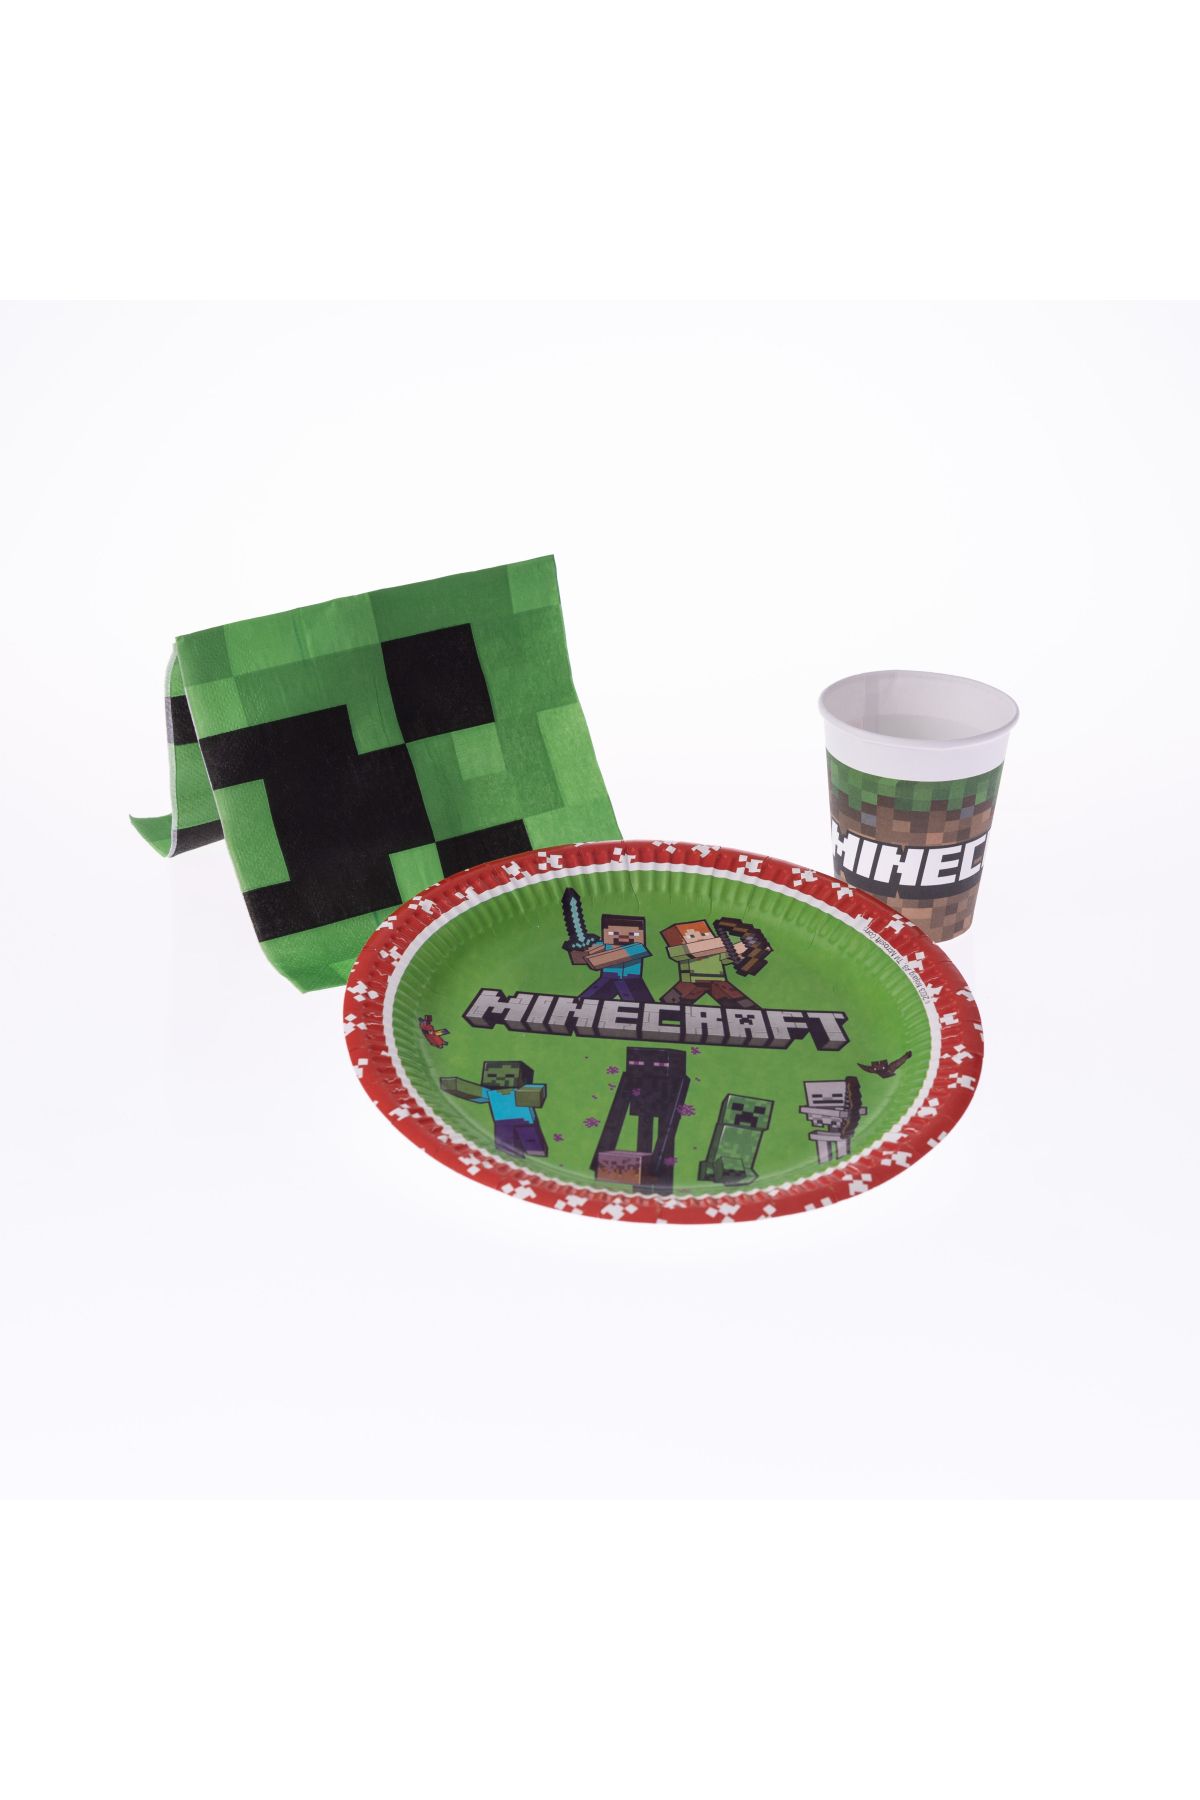 Bimotif Minecraft Temalı 3 Parça Parti Seti Tabak, Bardak, Peçete 4er Adet